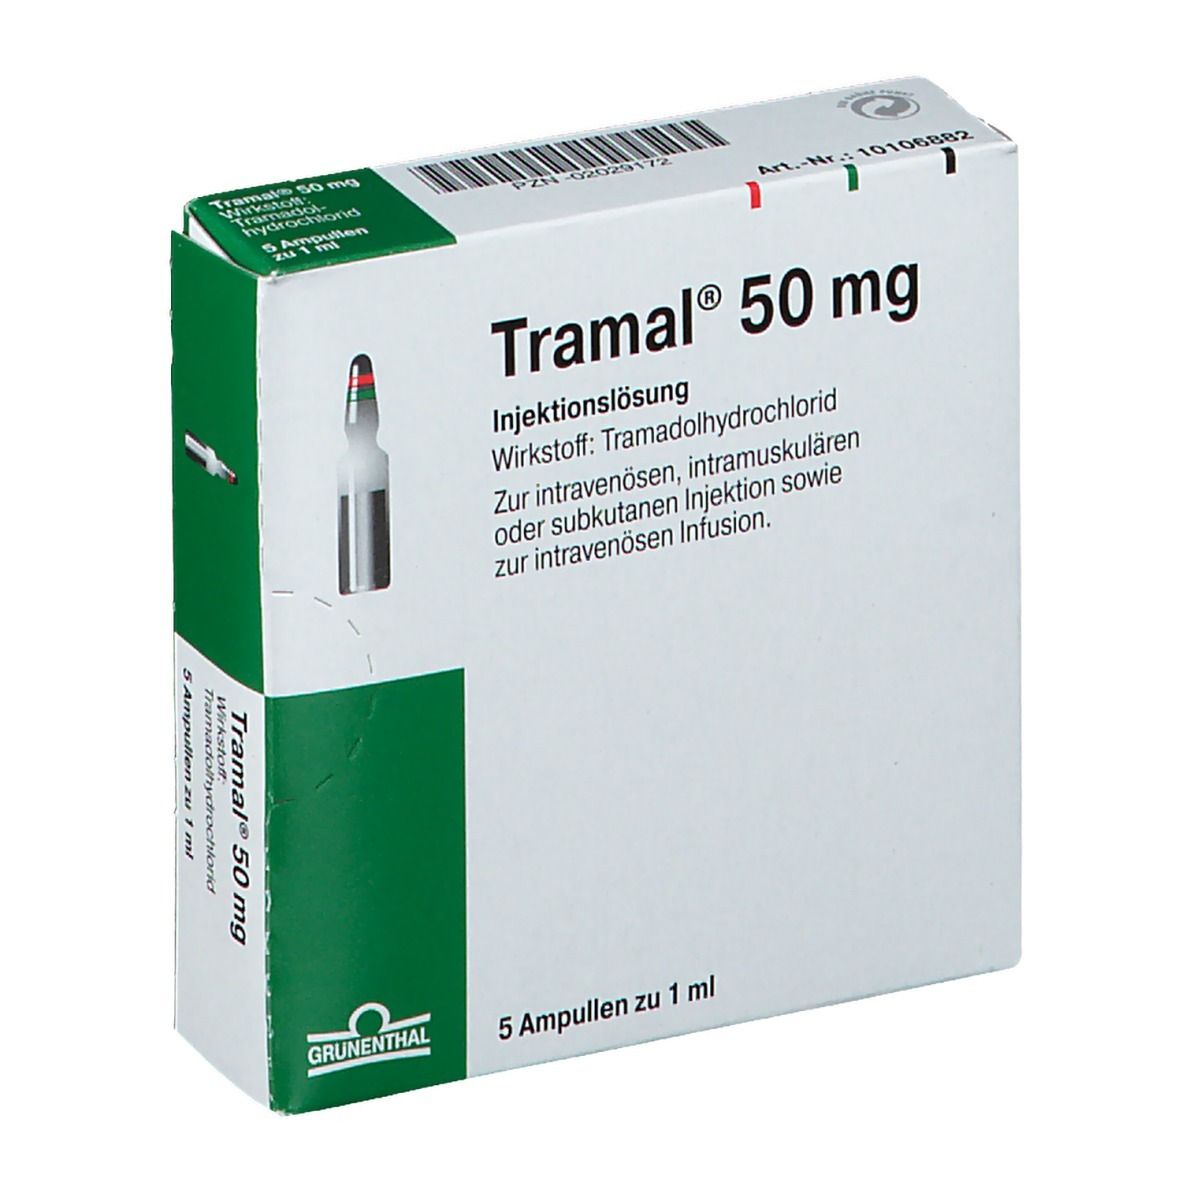 Tramal® 50 mg